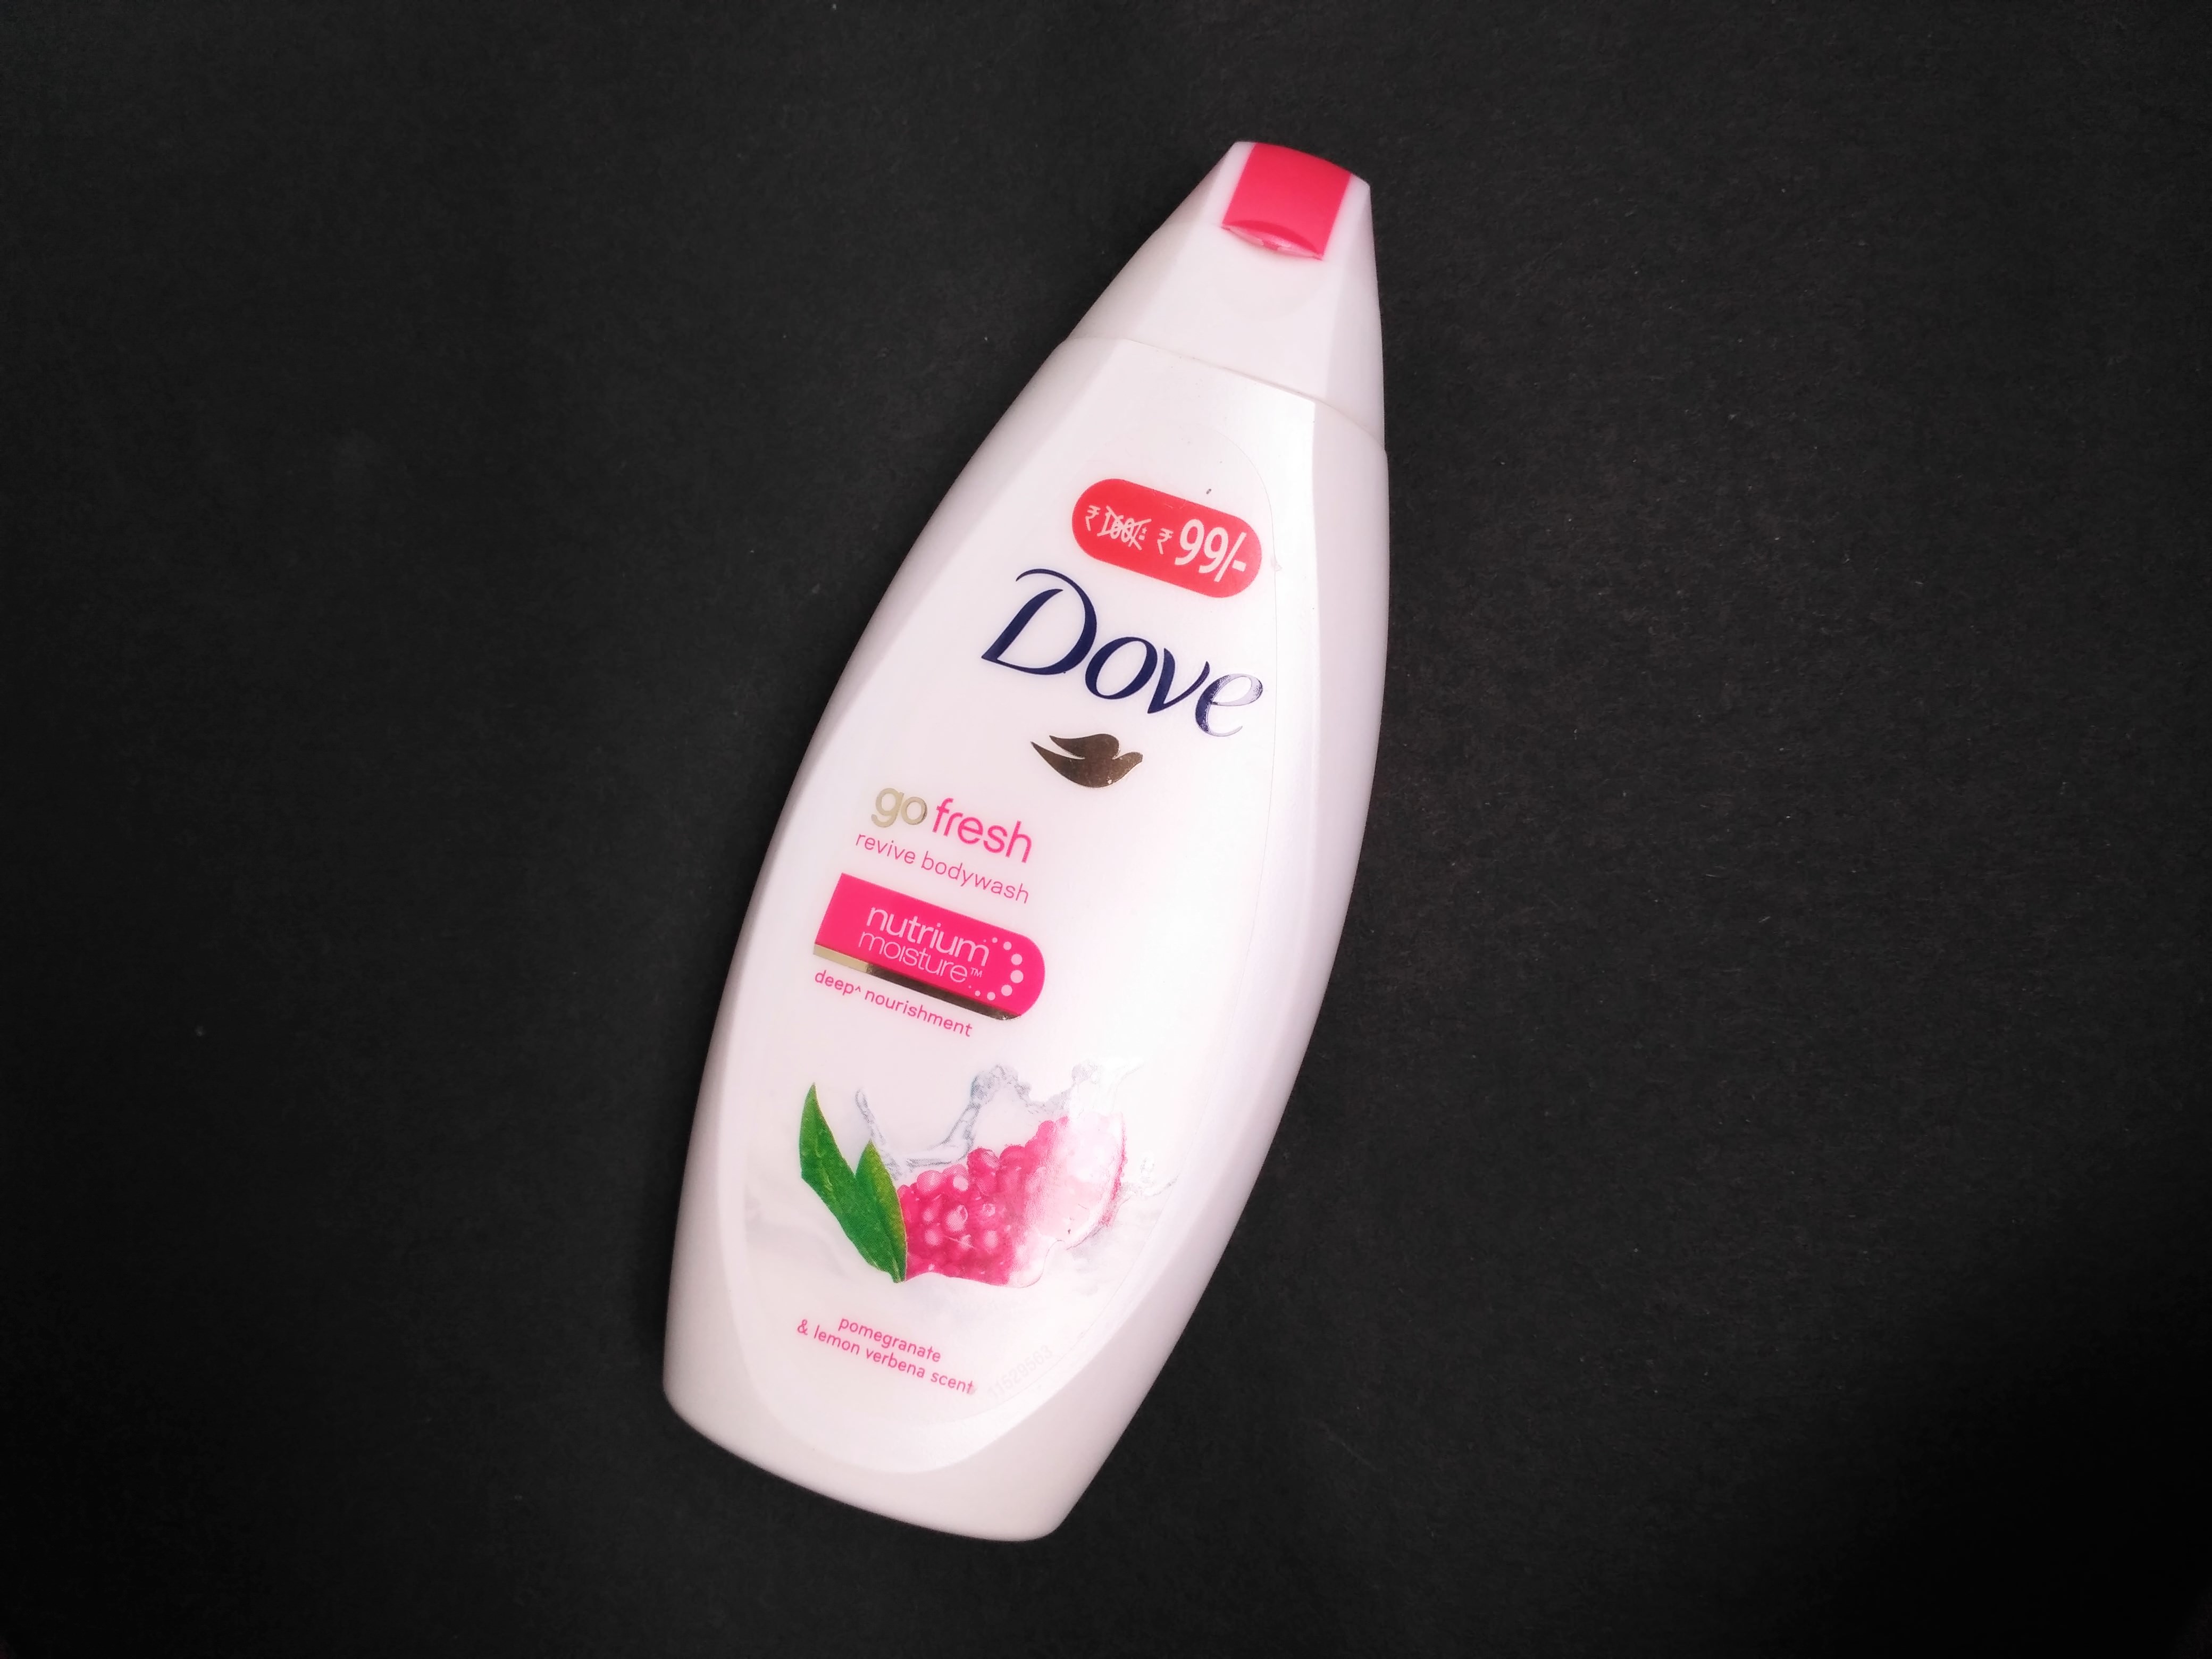 Dove Go Fresh Revive Pomegranate Body Wash Review